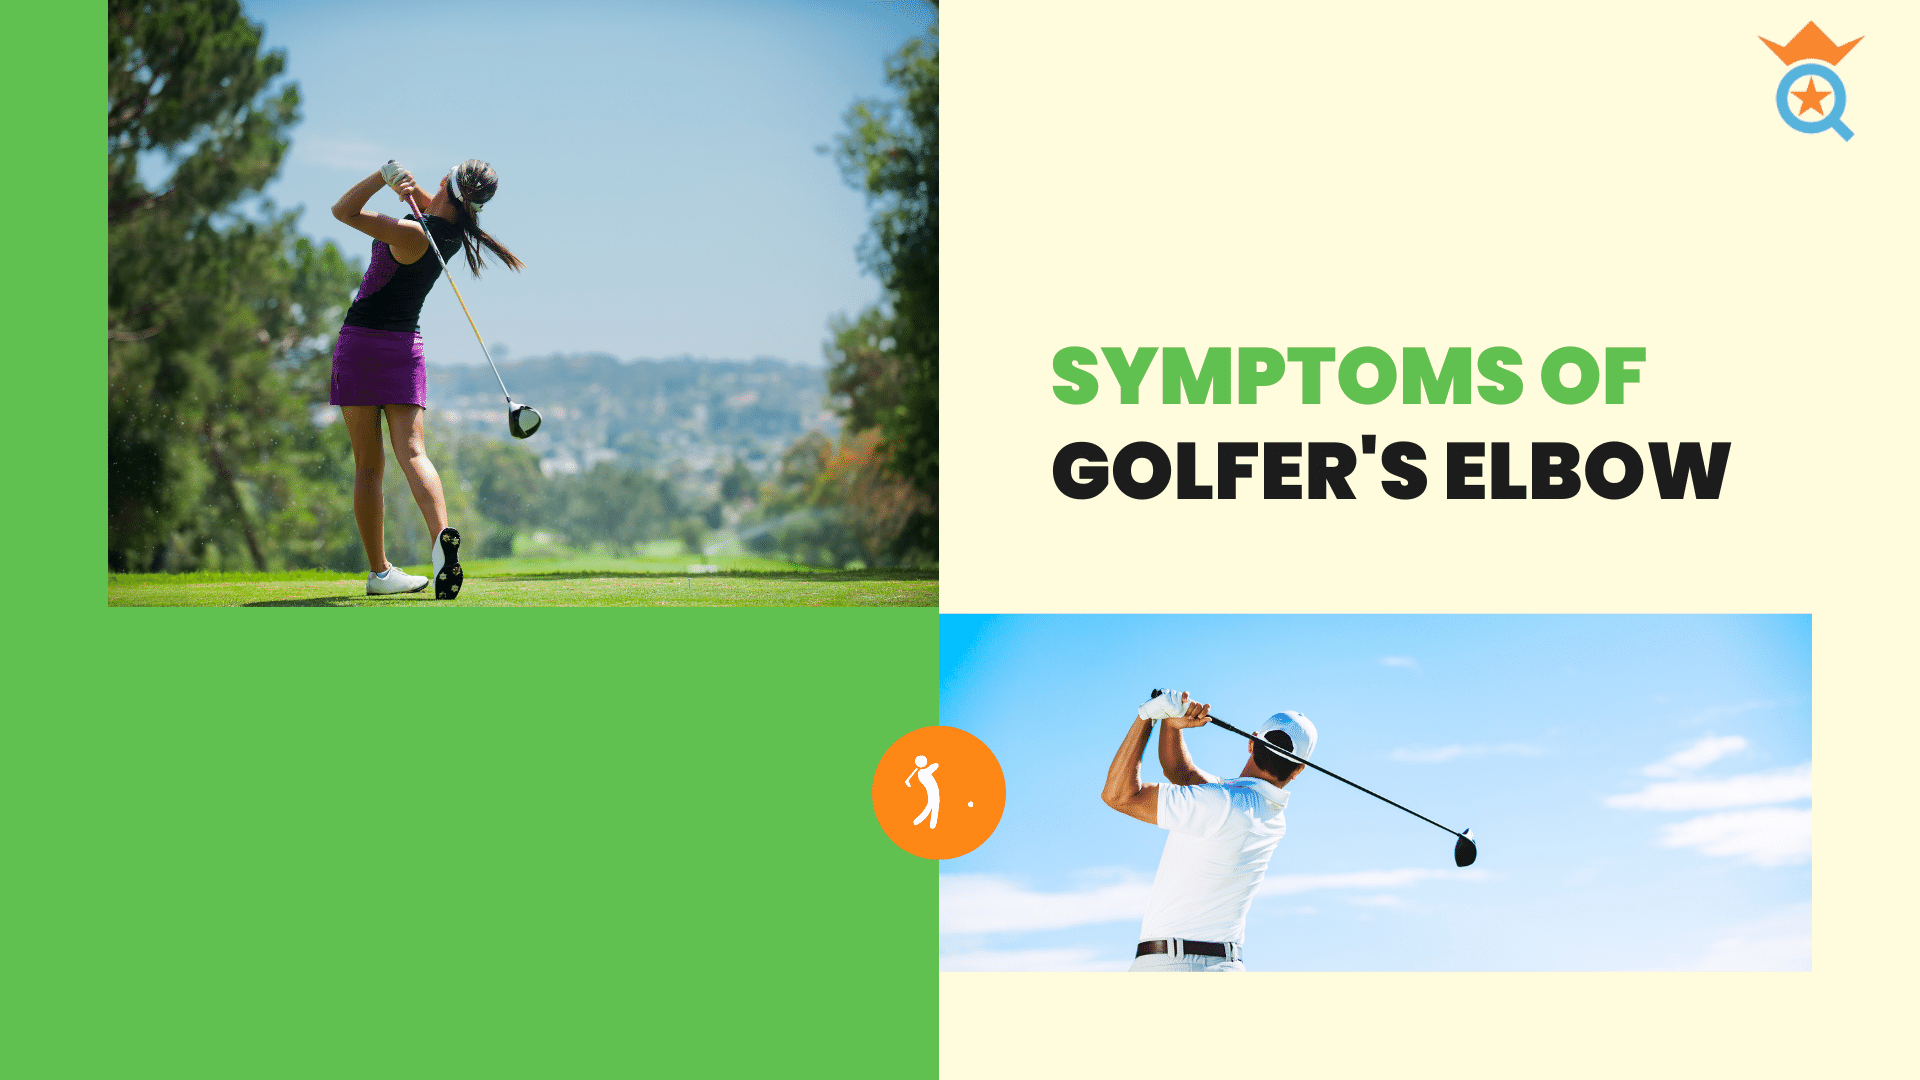 Symptoms of Golfer's Elbow